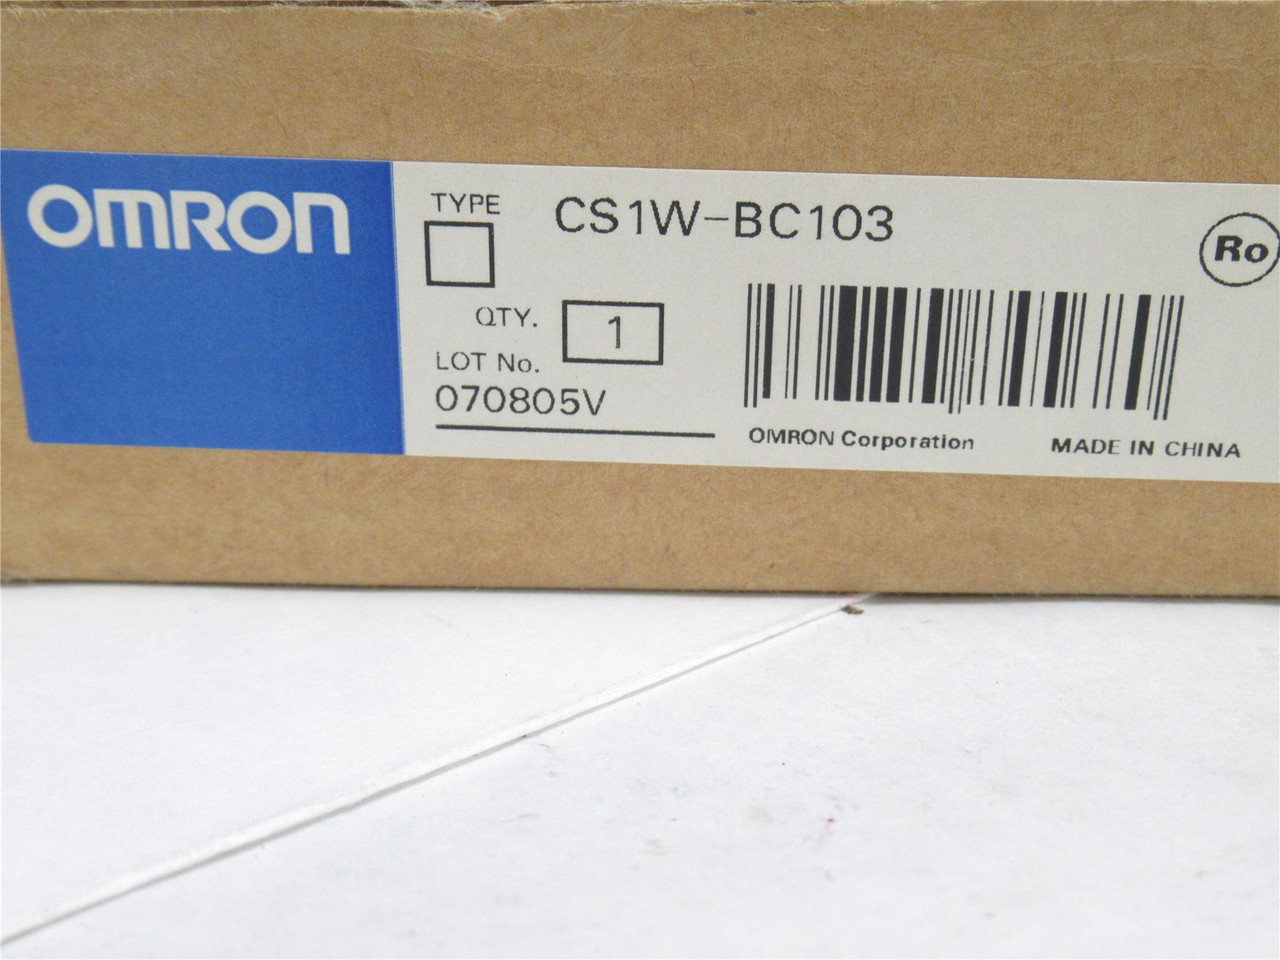 Omron CS1W-BC103; CPU Backplane Base Unit; 10-Slot